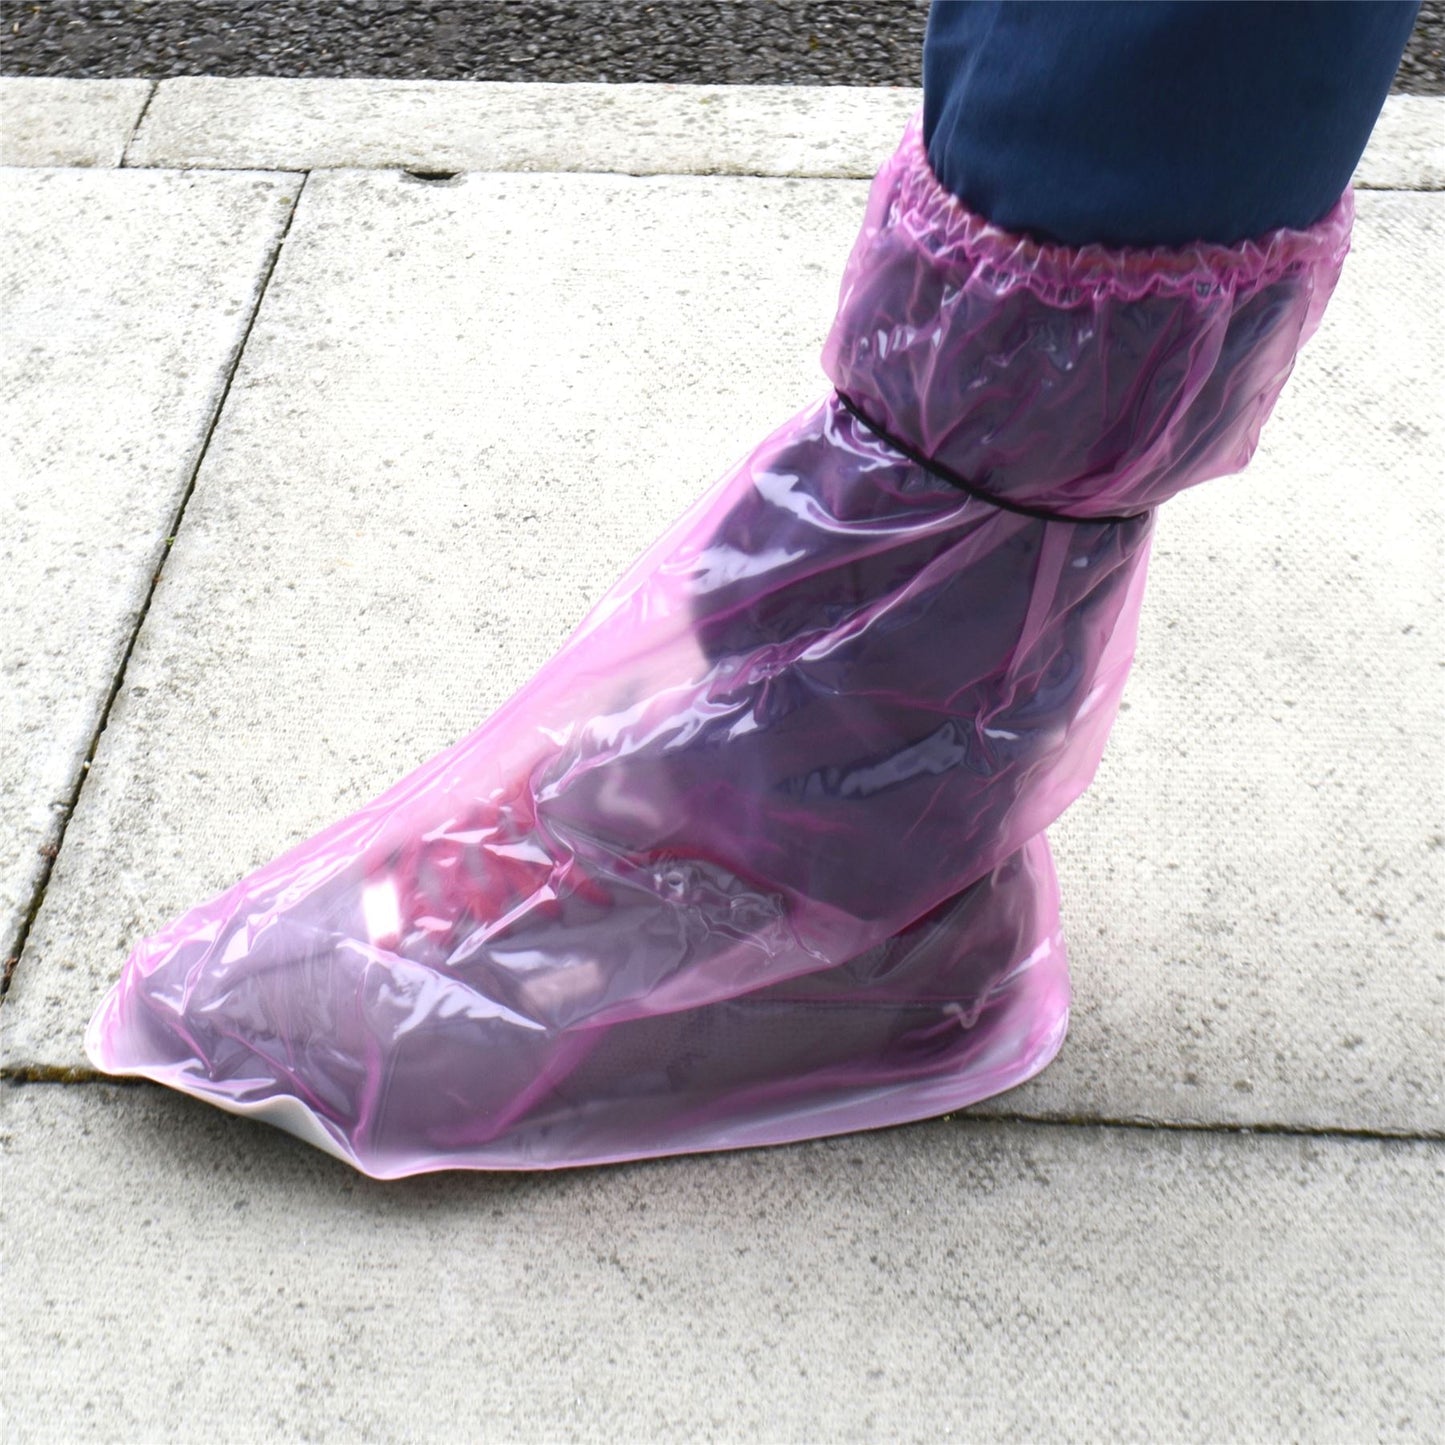 Reusable Shoe Covers, Waterproof Shoe Protectors, Slip-Resistant Shoe Cover